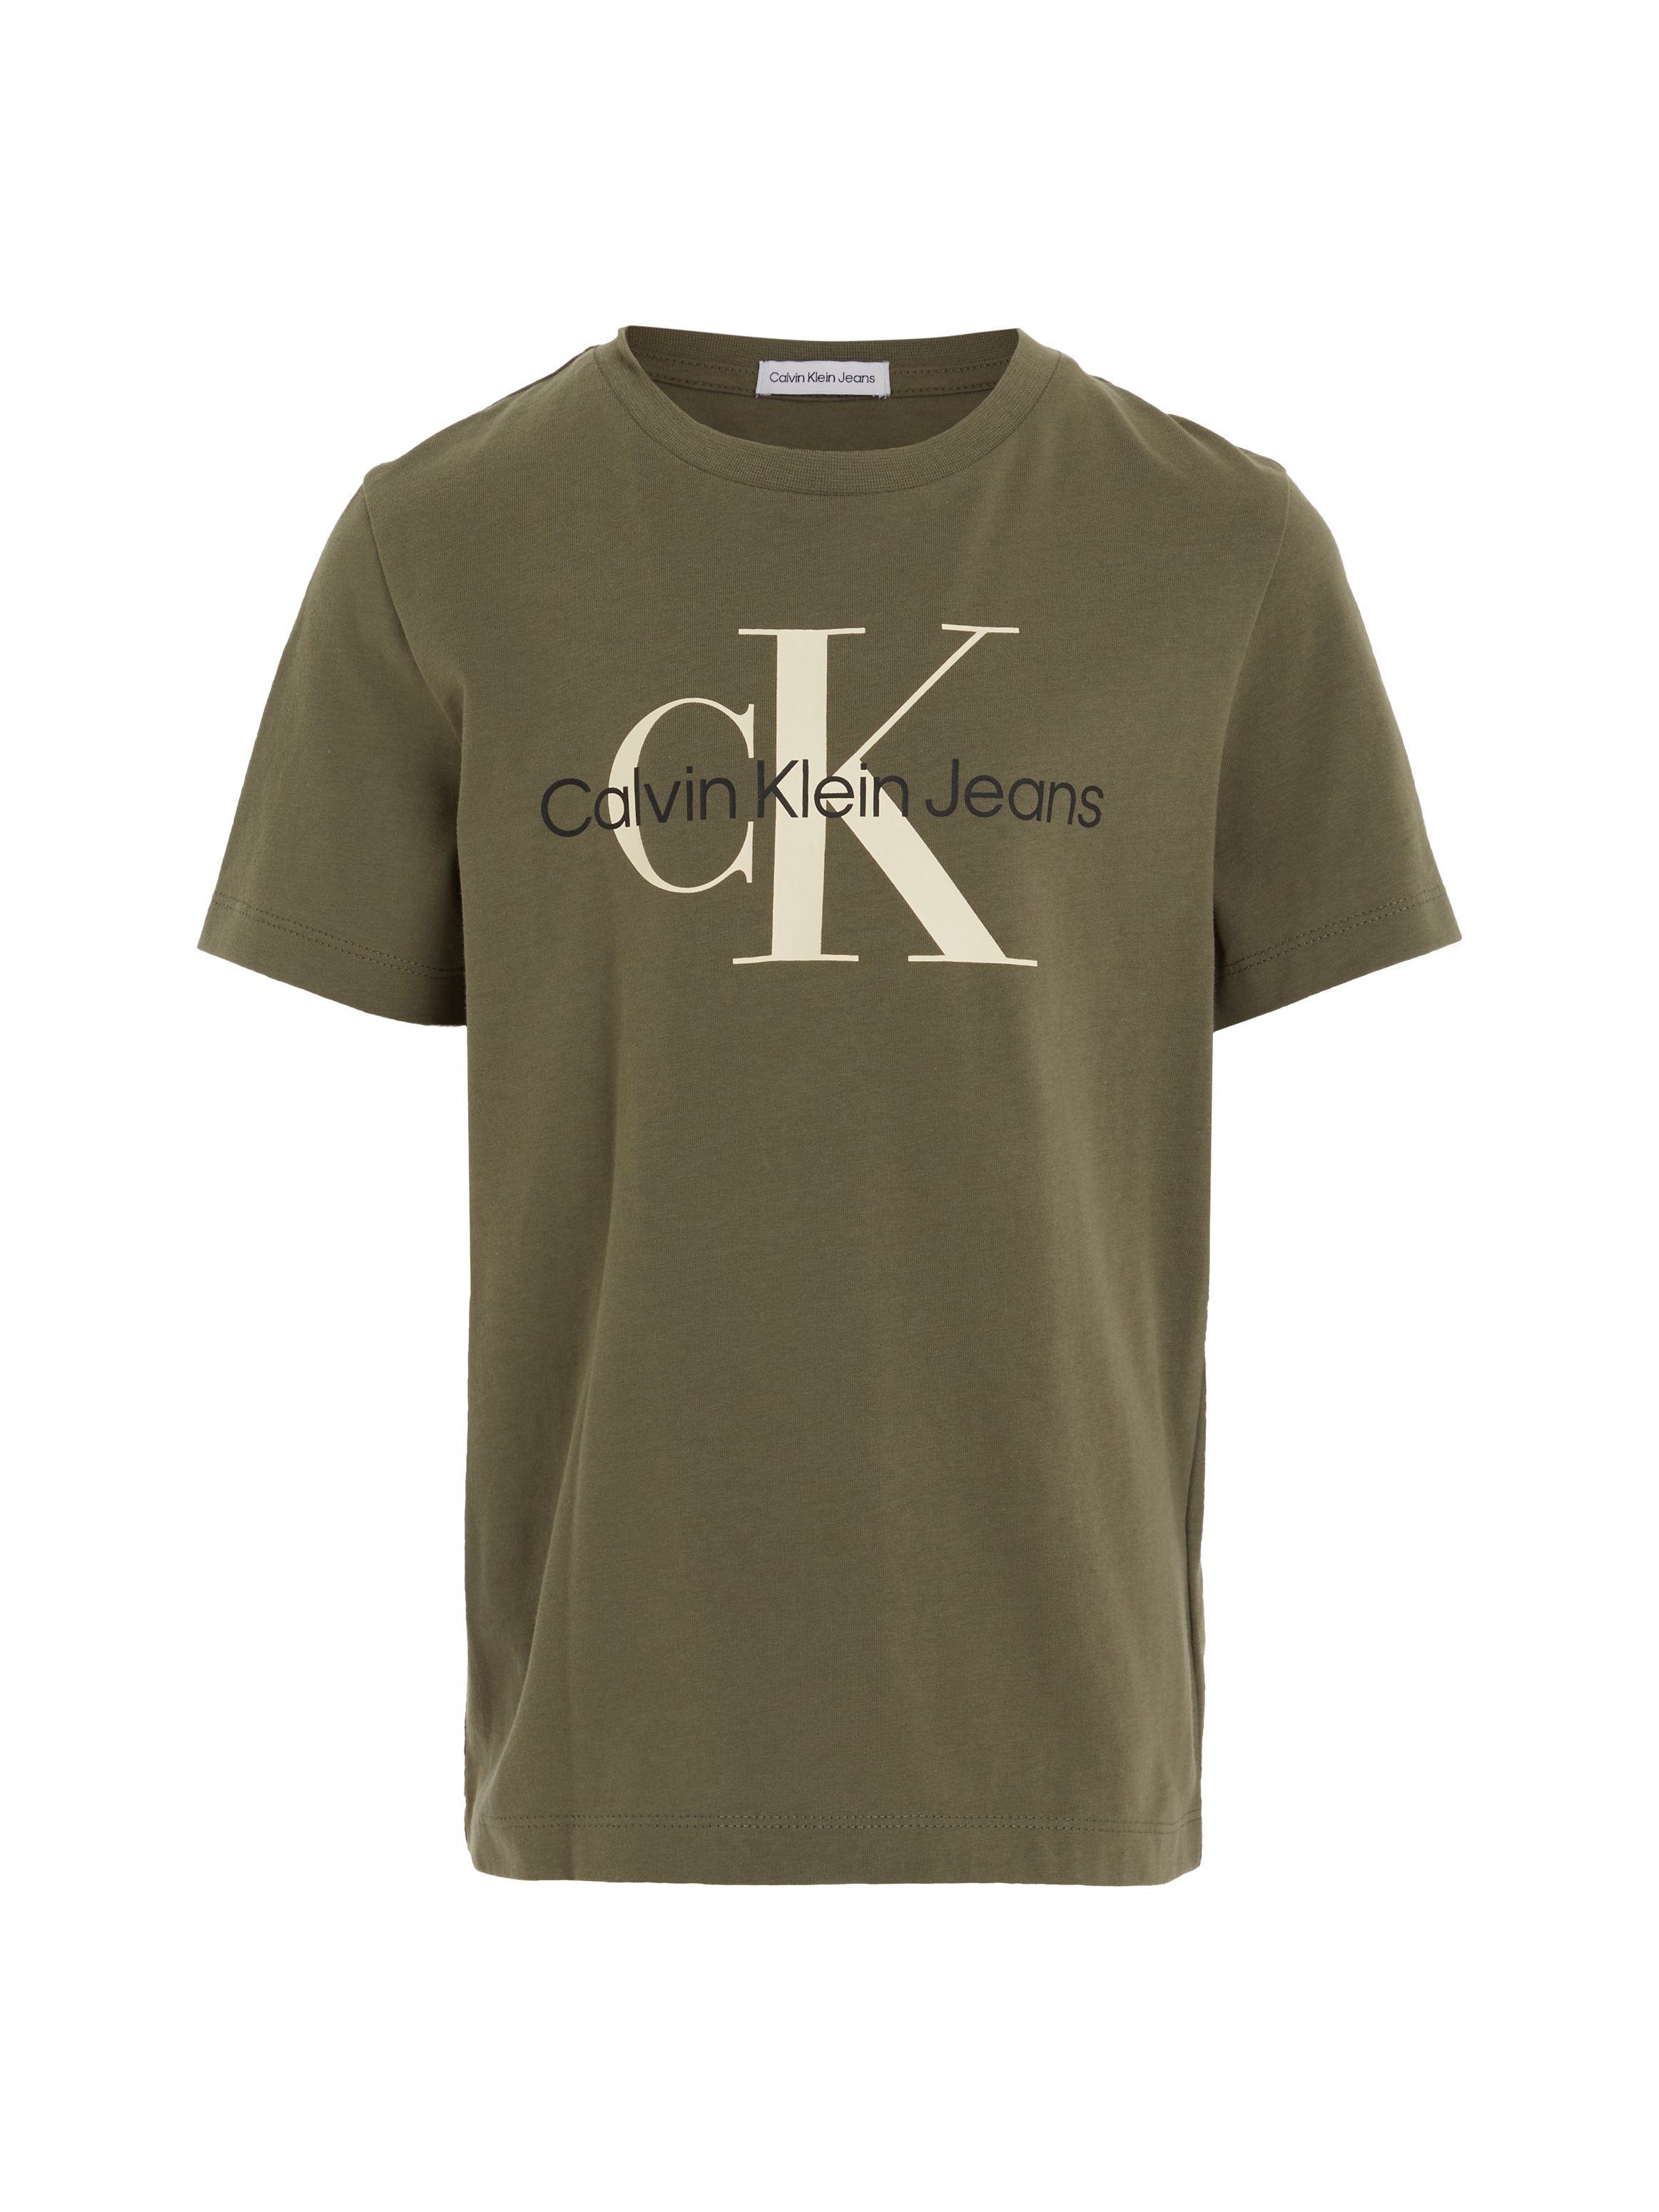 Calvin Klein Jeans MONOGRAM CK T-Shirt Dusty Olive T-SHIRT SS